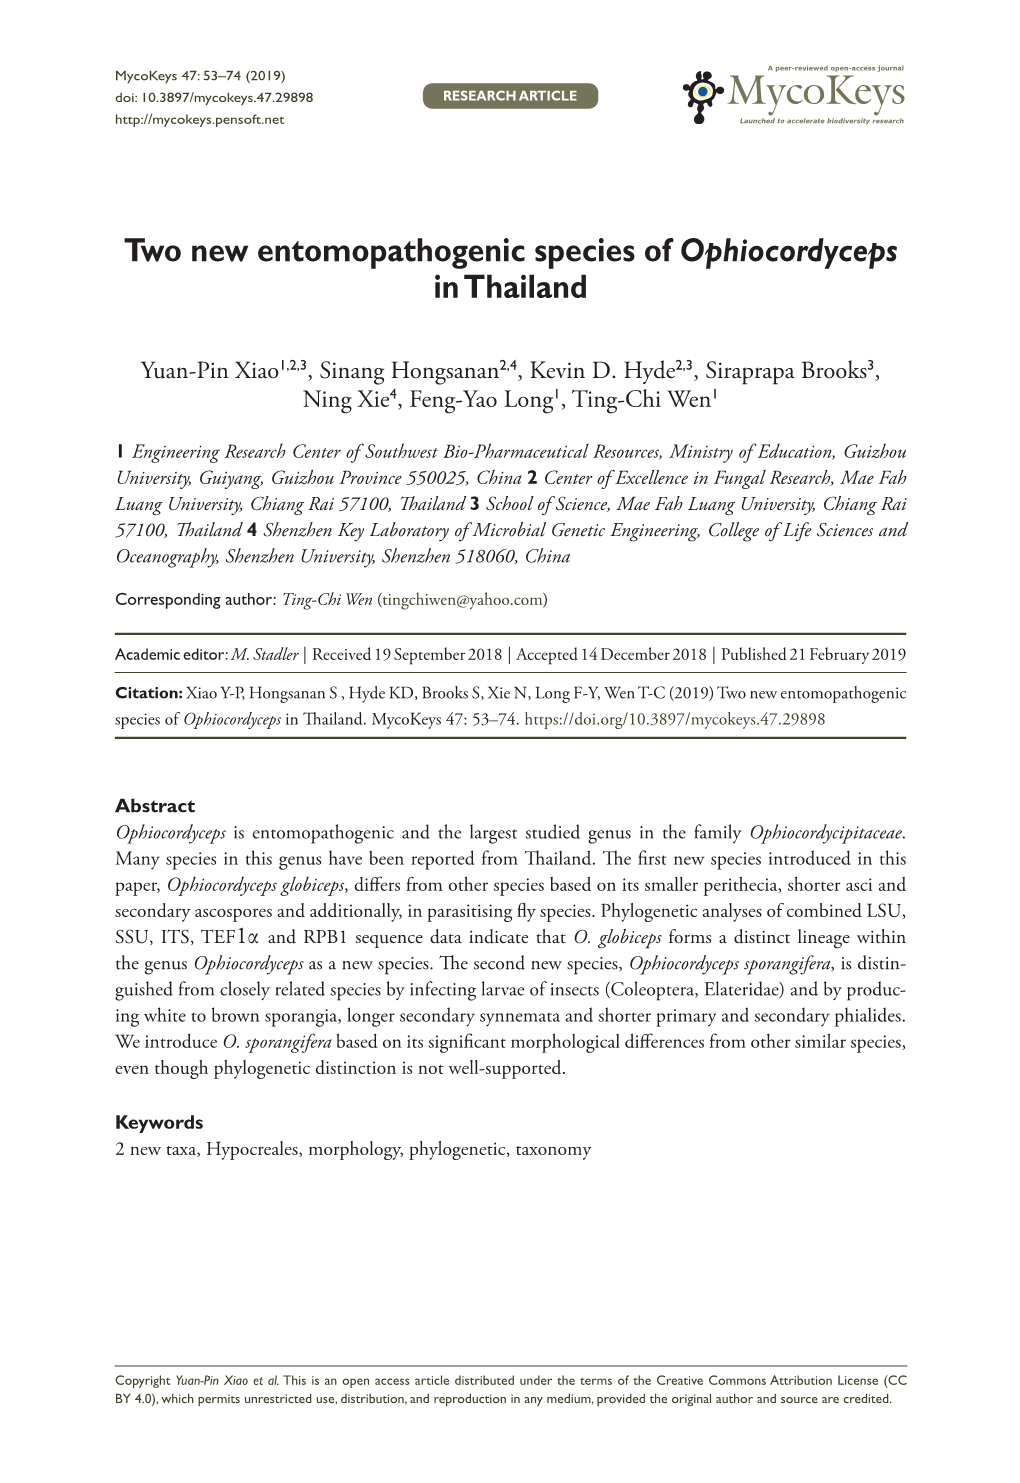 Two New Entomopathogenic Species of Ophiocordyceps in Thailand